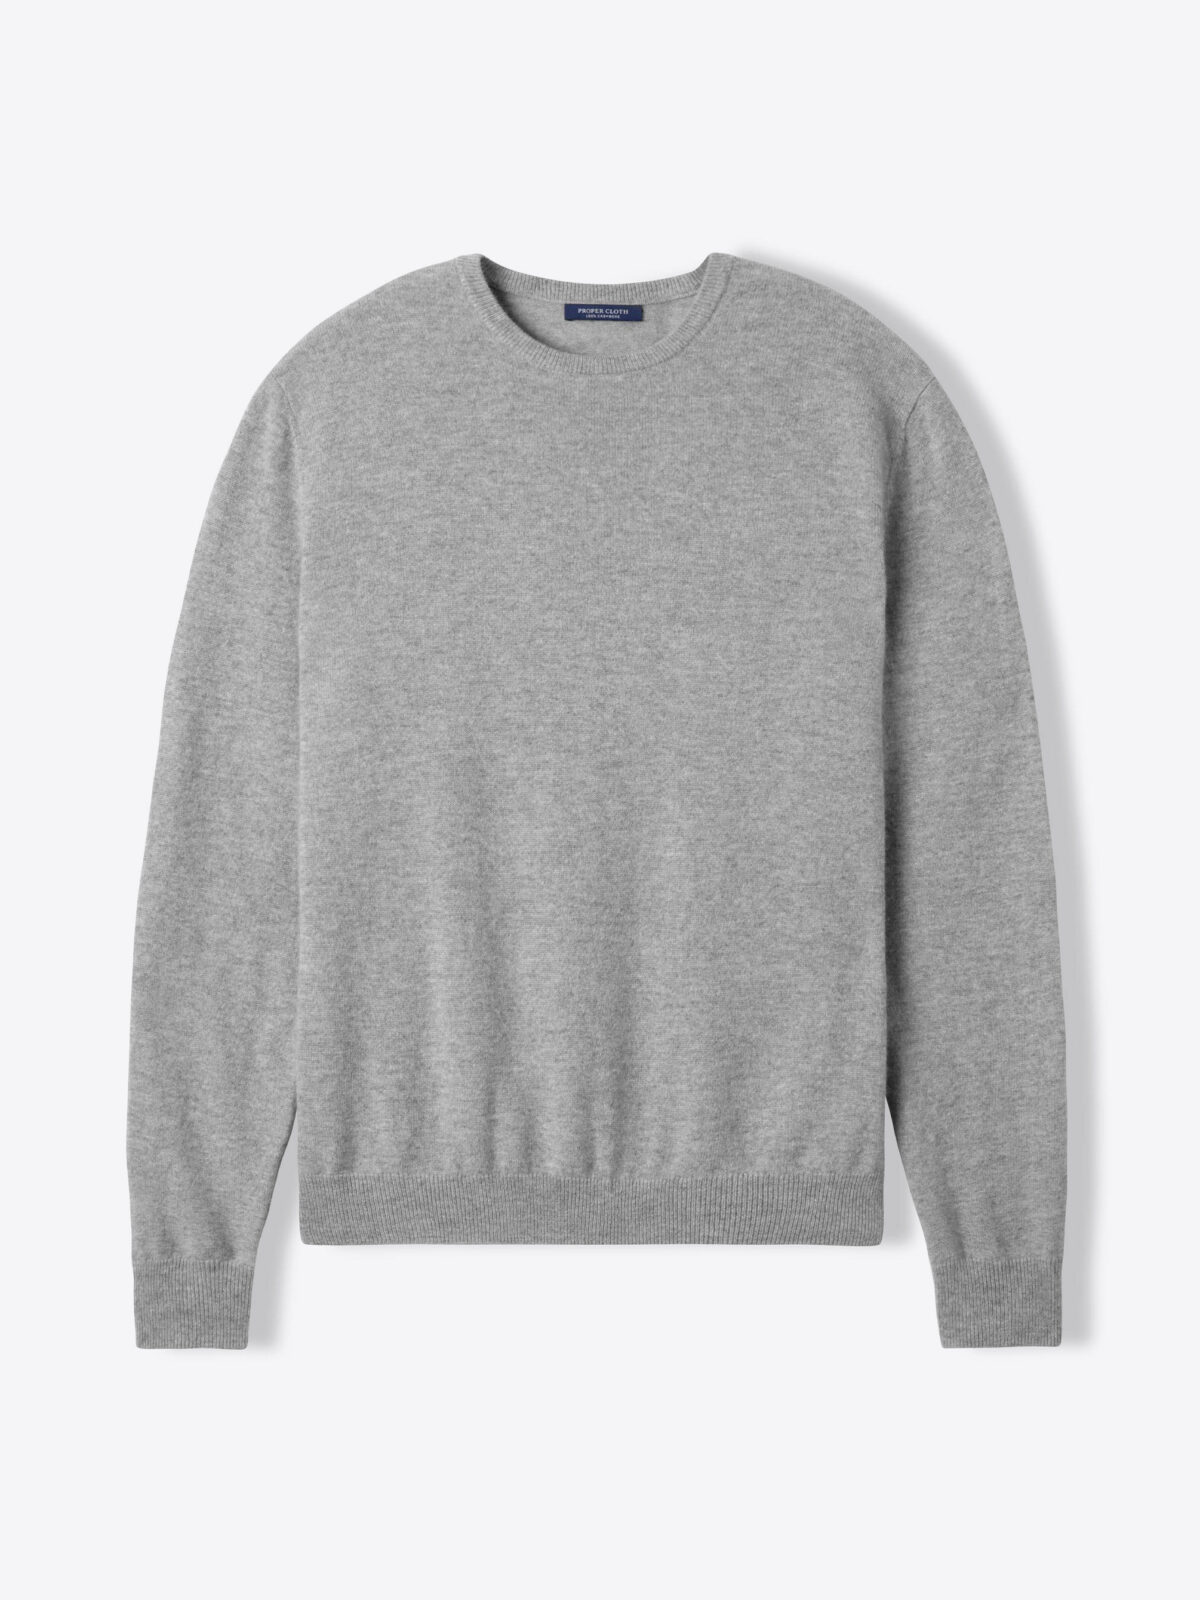 JOSH DANIEL Womens Plus Size Hoodies for Winter Sweatshirts, Color Charcoal  Grey Melange